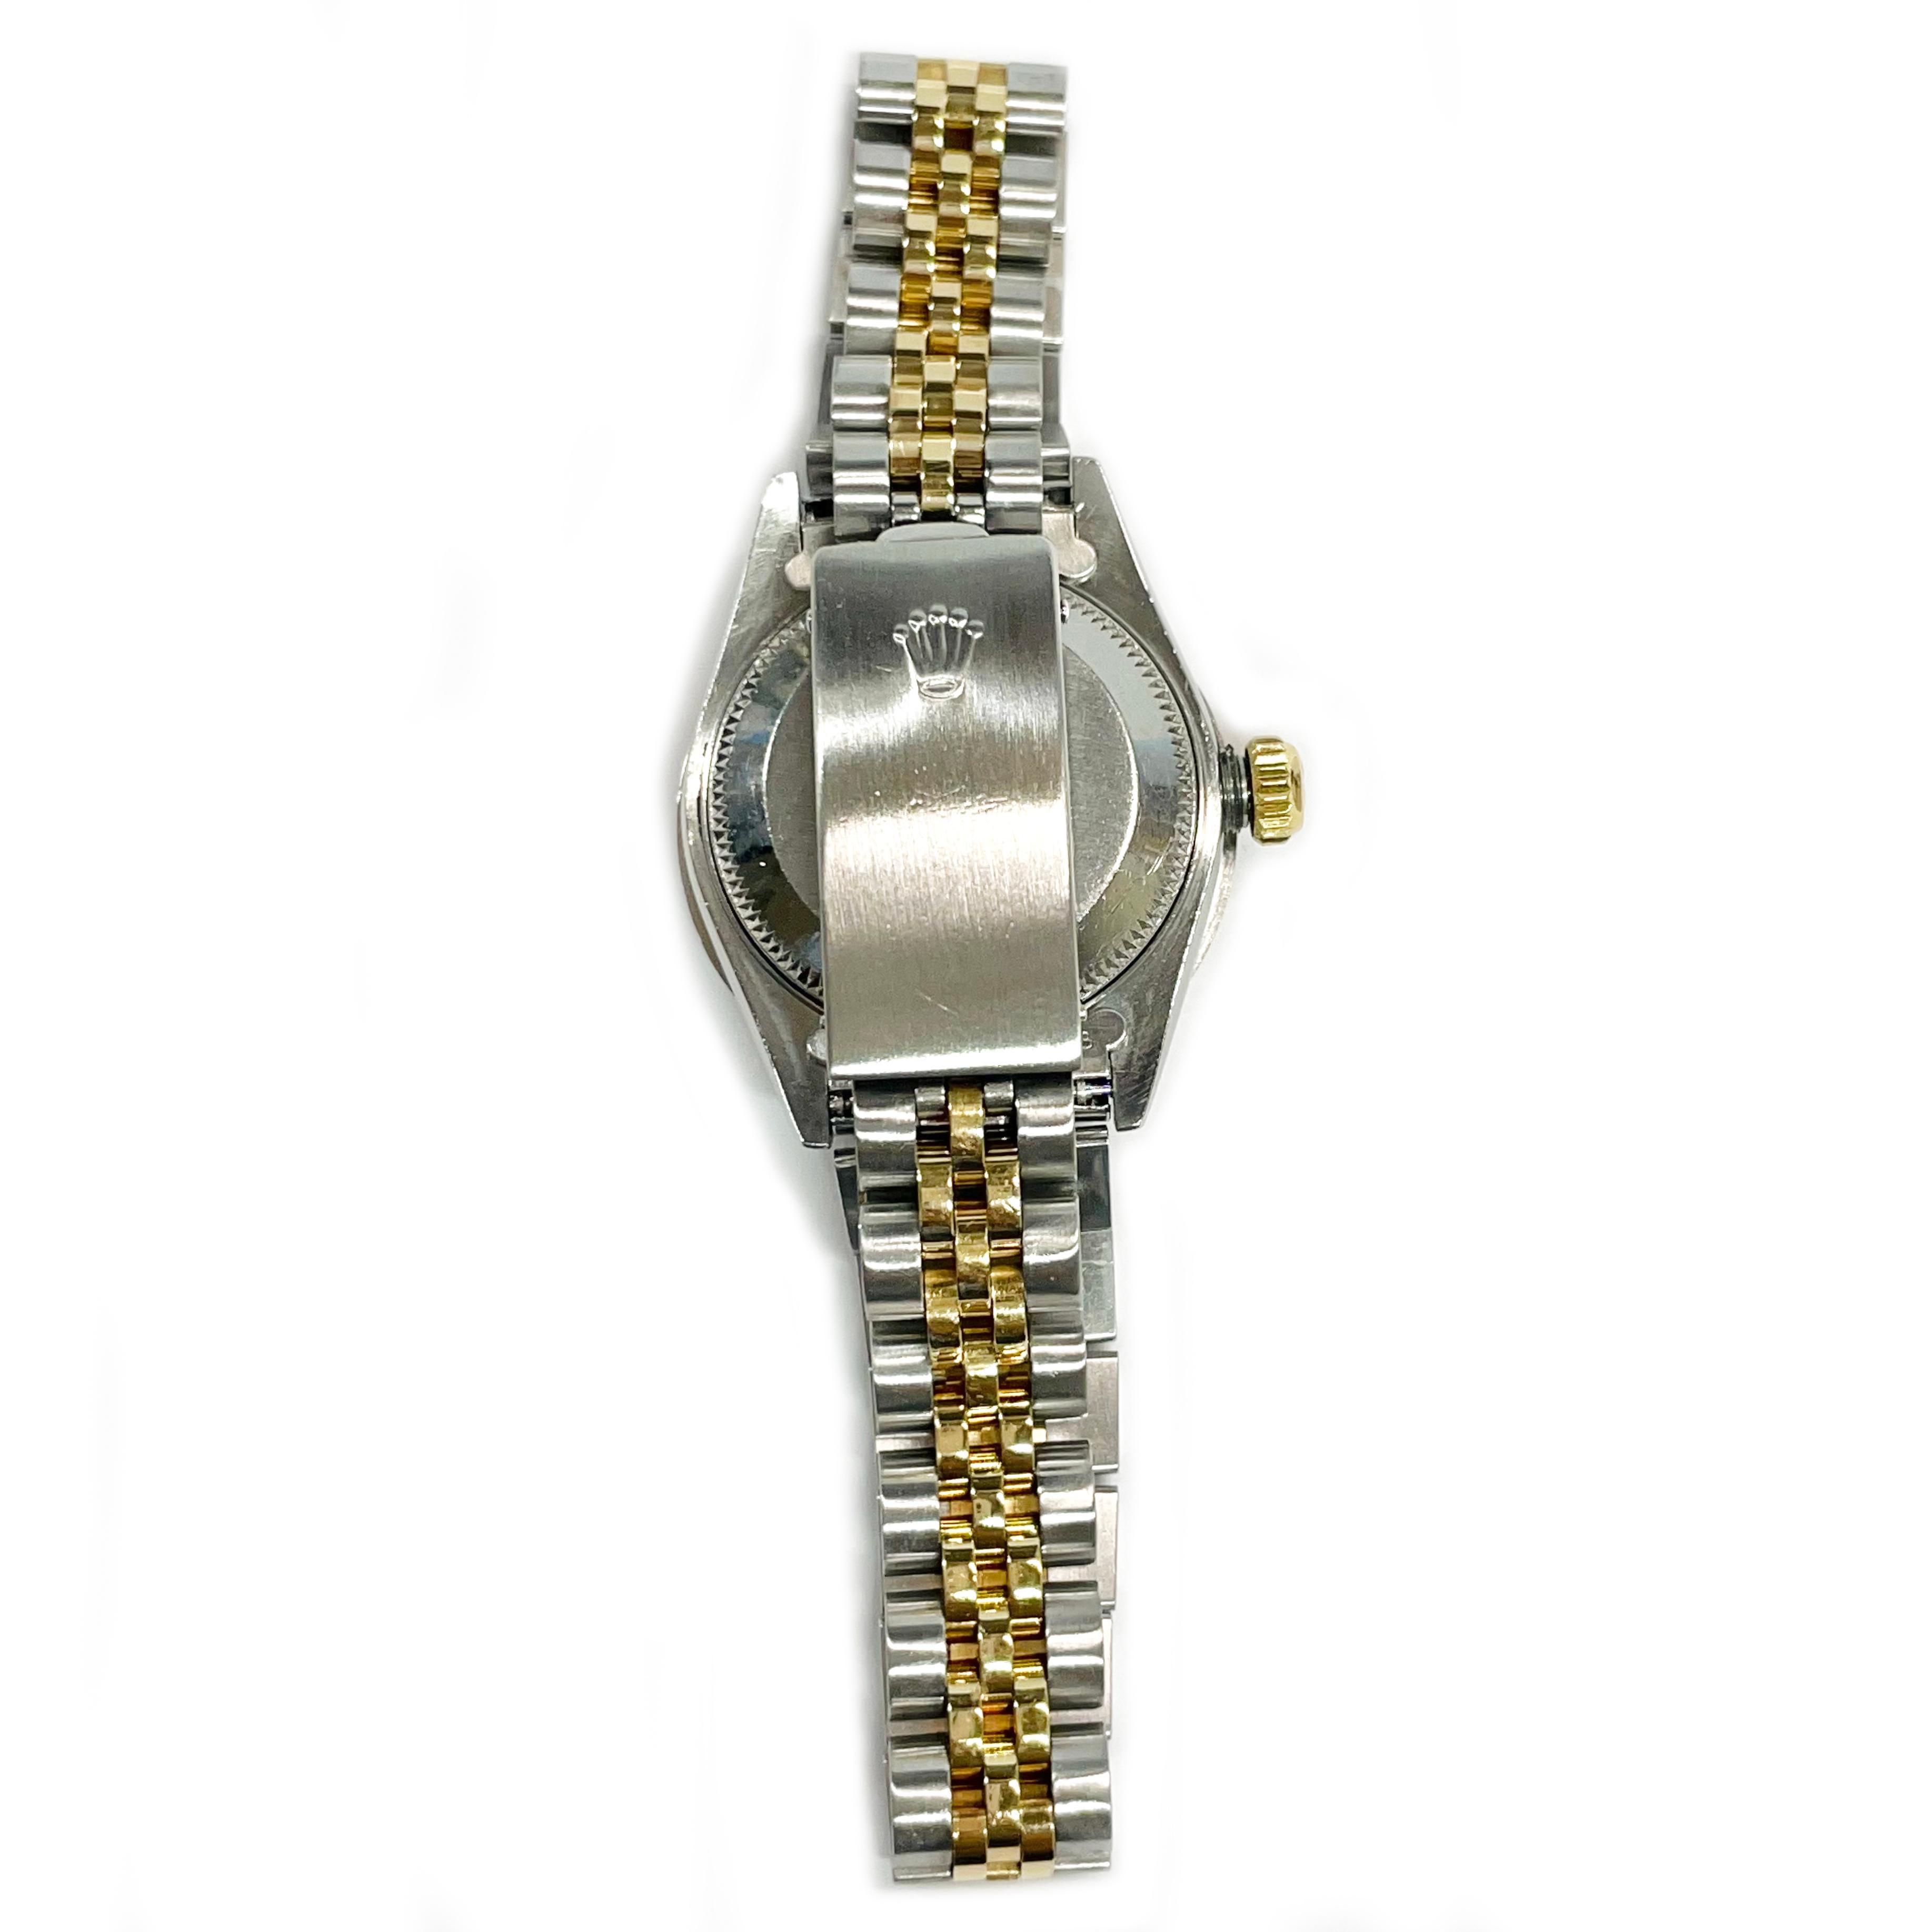 Round Cut Ladies Two-Tone Rolex Oyster Perpetual Datejust Diamond Bezel Watch, Case/Box